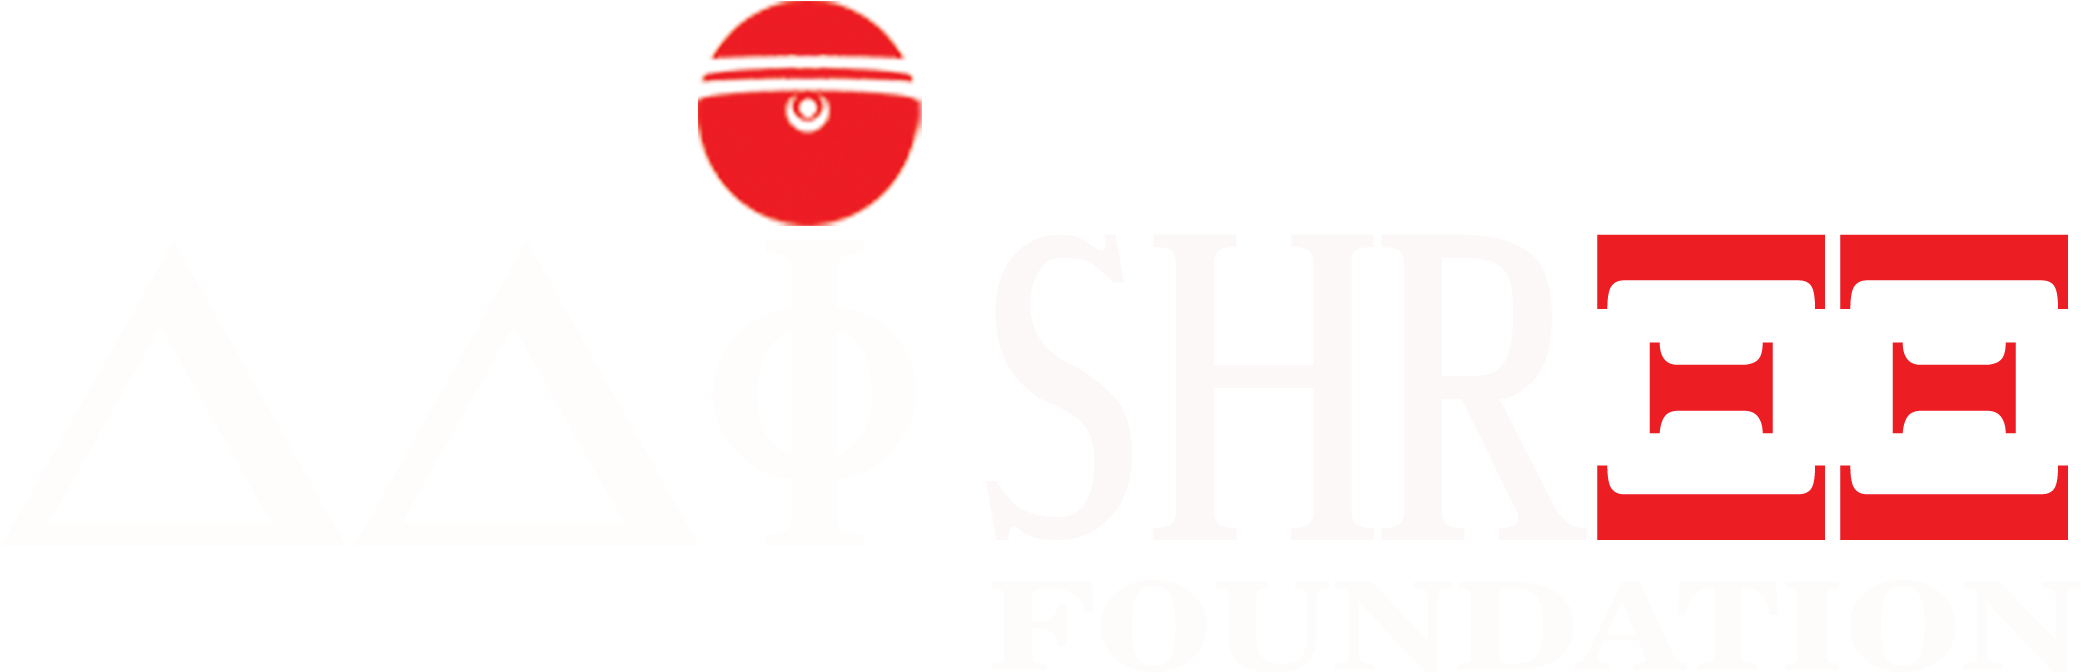 Aai Shree Foundation - Seiko Instruments Clipart (2100x671), Png Download